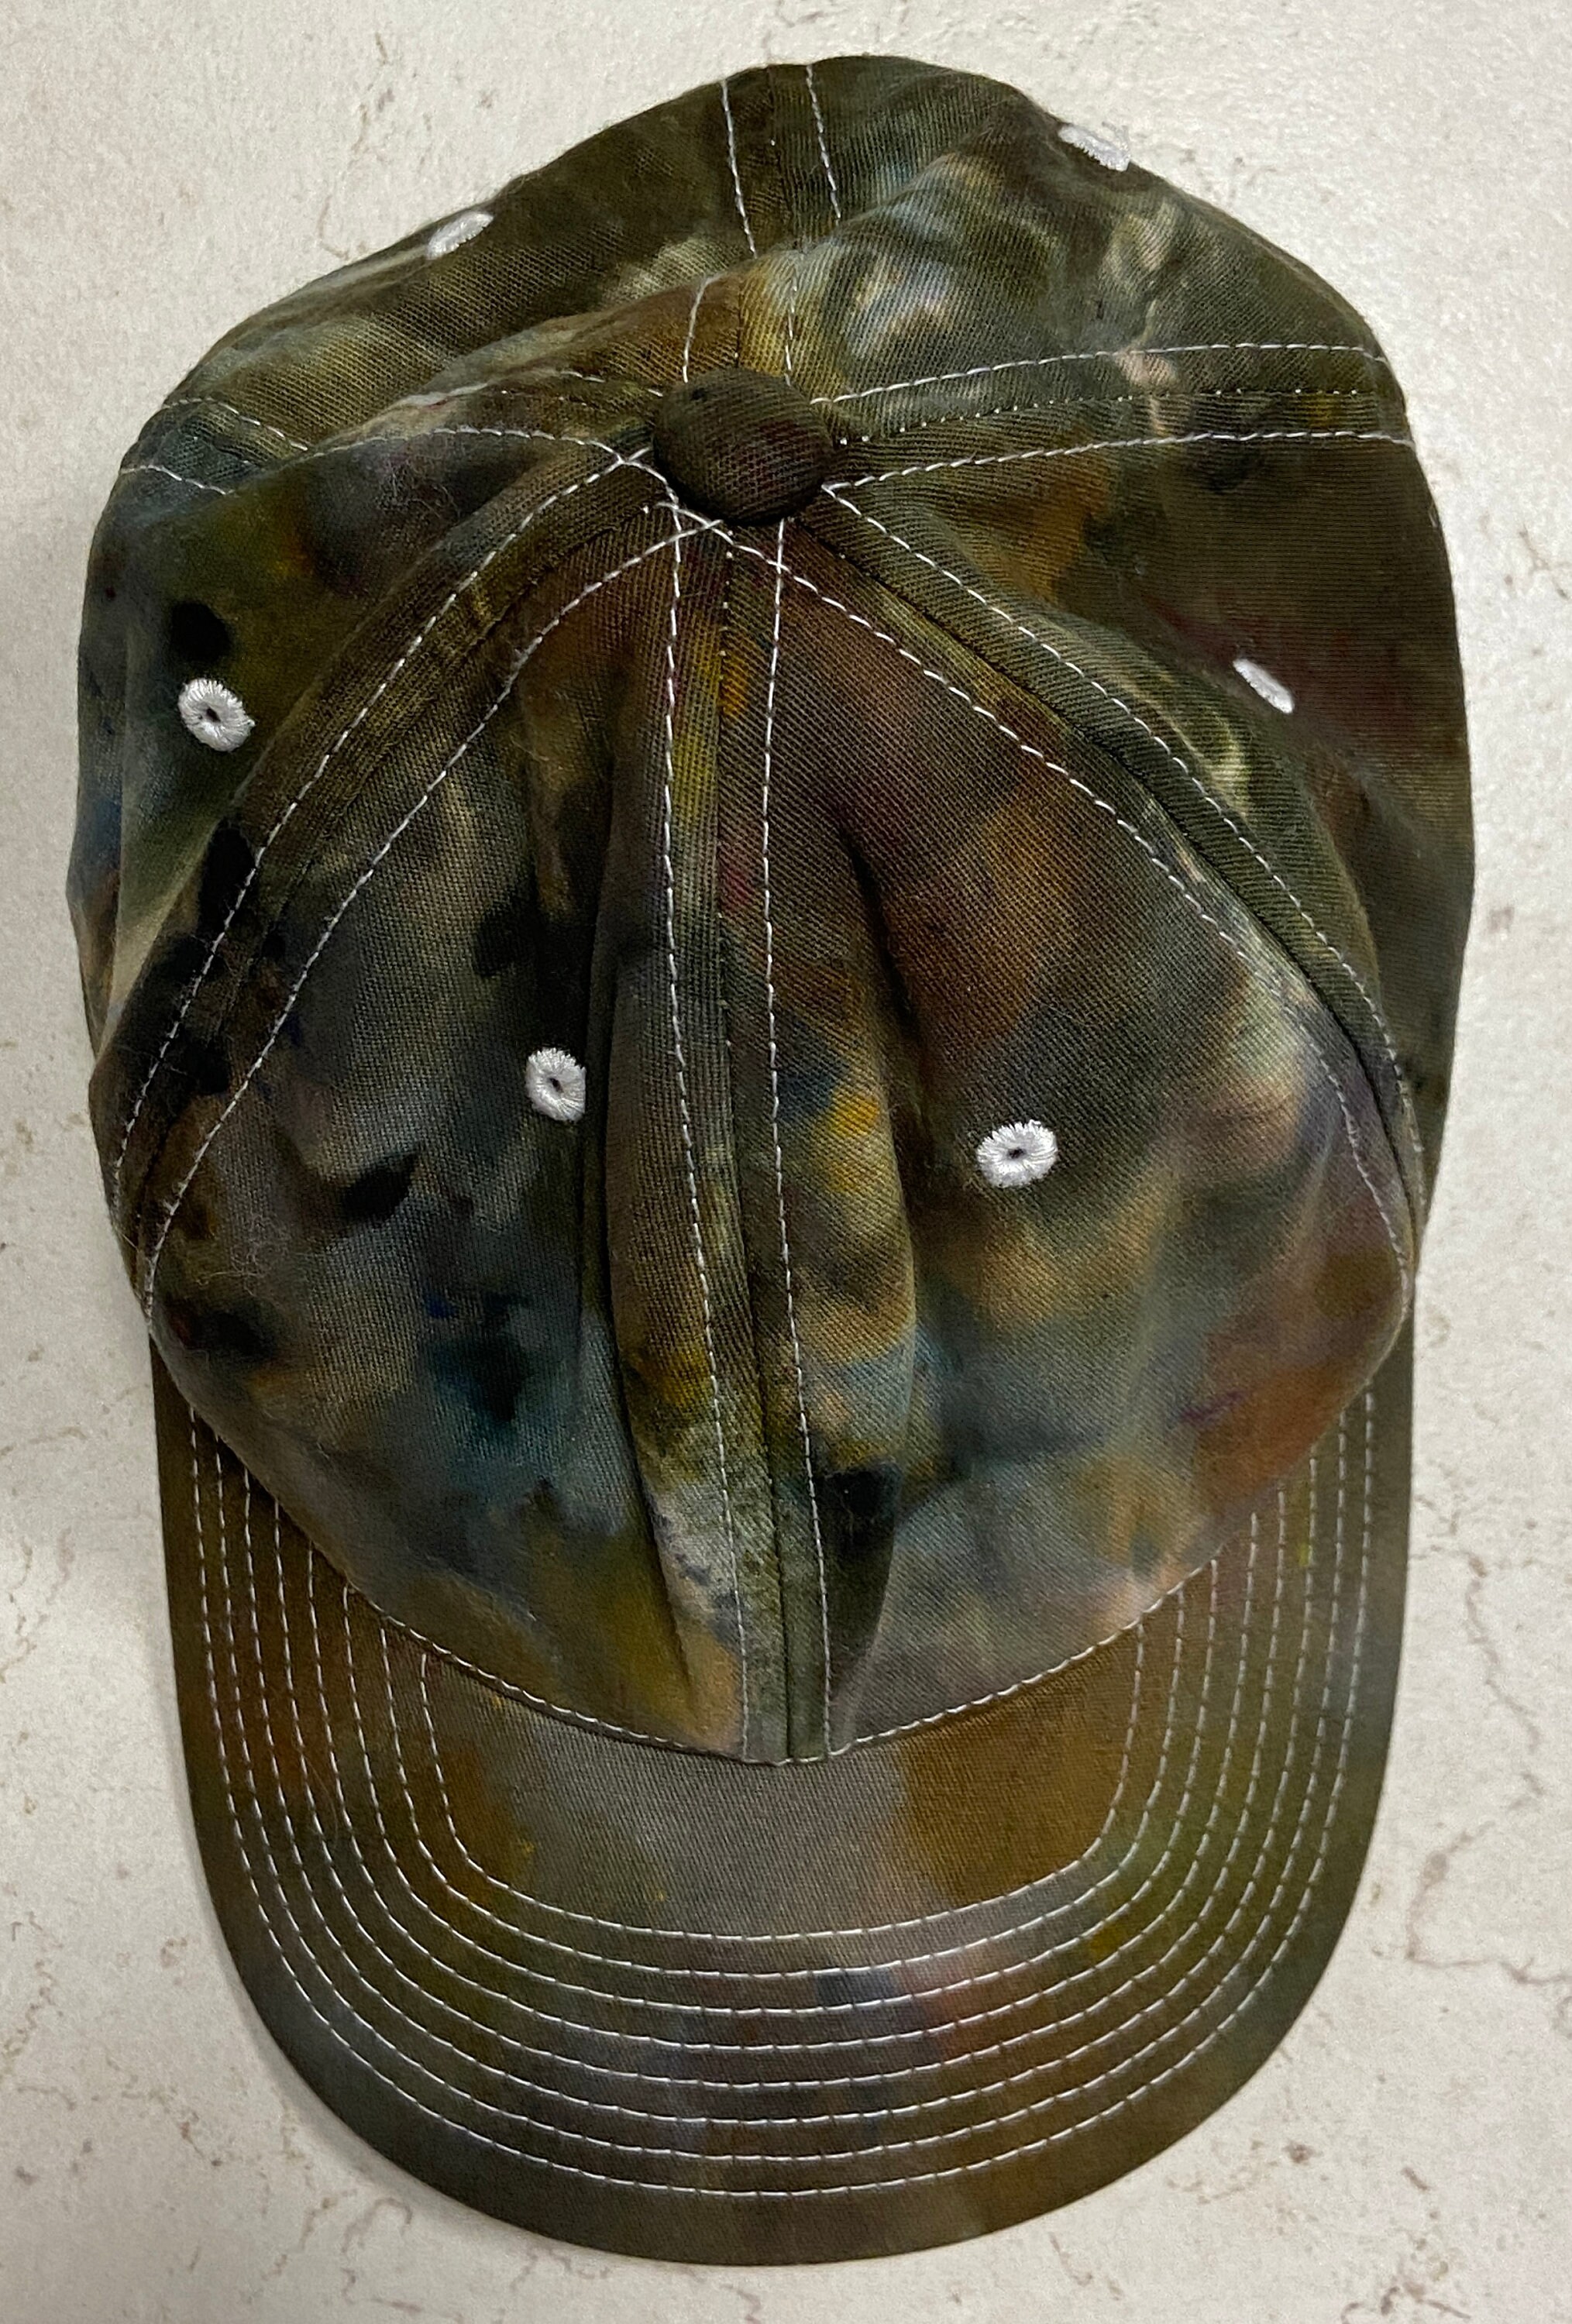 Ballcap Band Dye-style 3/4-7 size Sweat Camo S/M Flexfit - Cotton 6 Profile Structured Spandex W/ Camouflage-mid Cap ma42 Hat Tie Etsy Hat 1/4